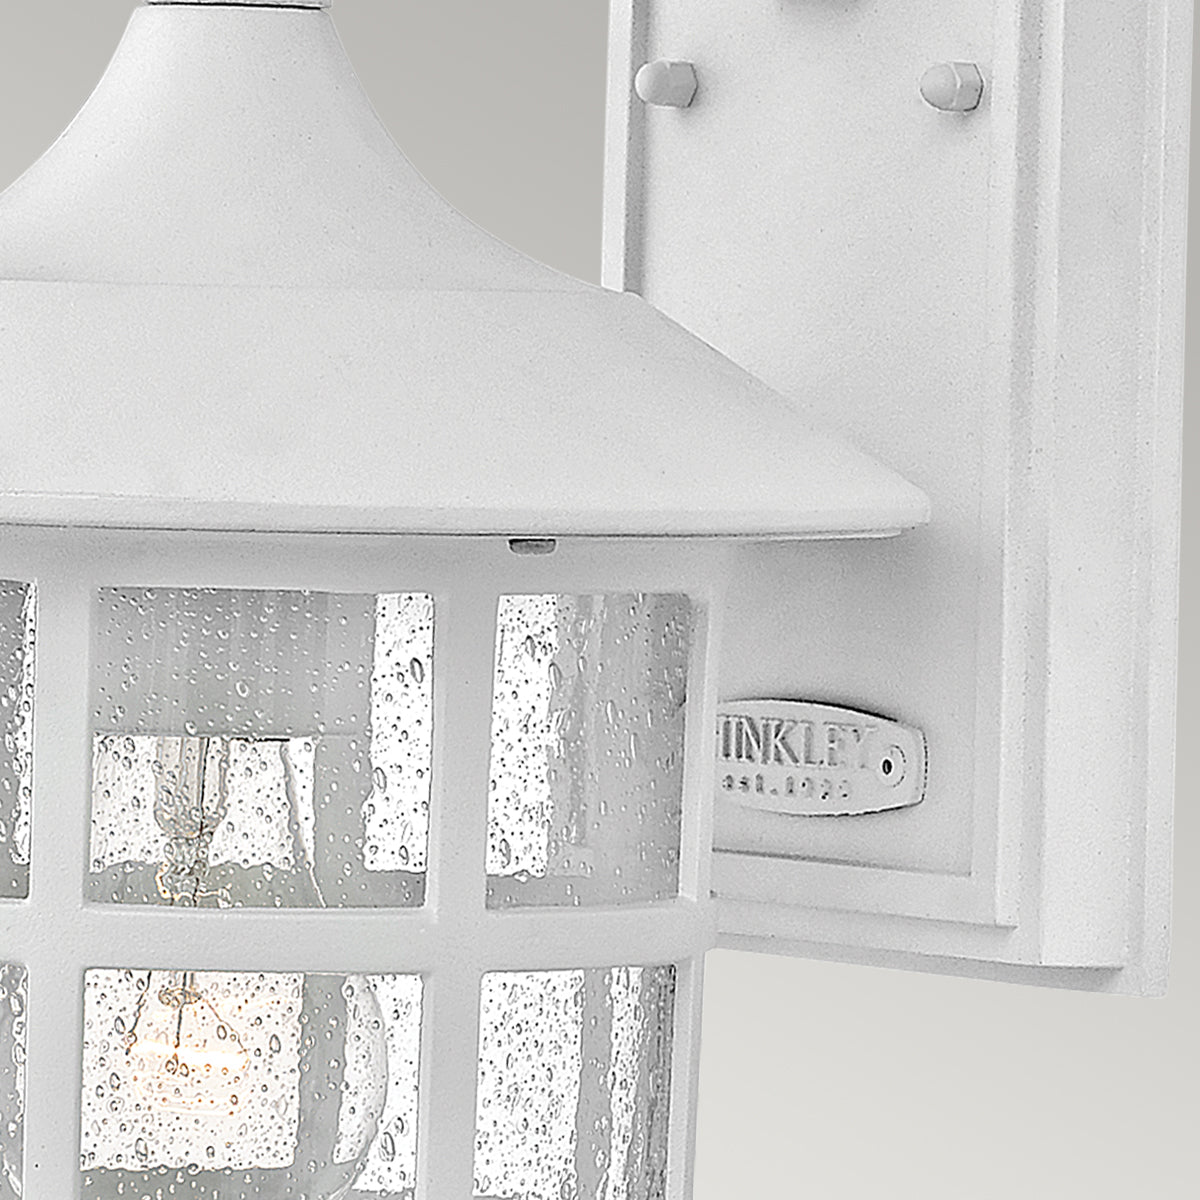 Freeport Medium Wall Lantern - Textured White Finish